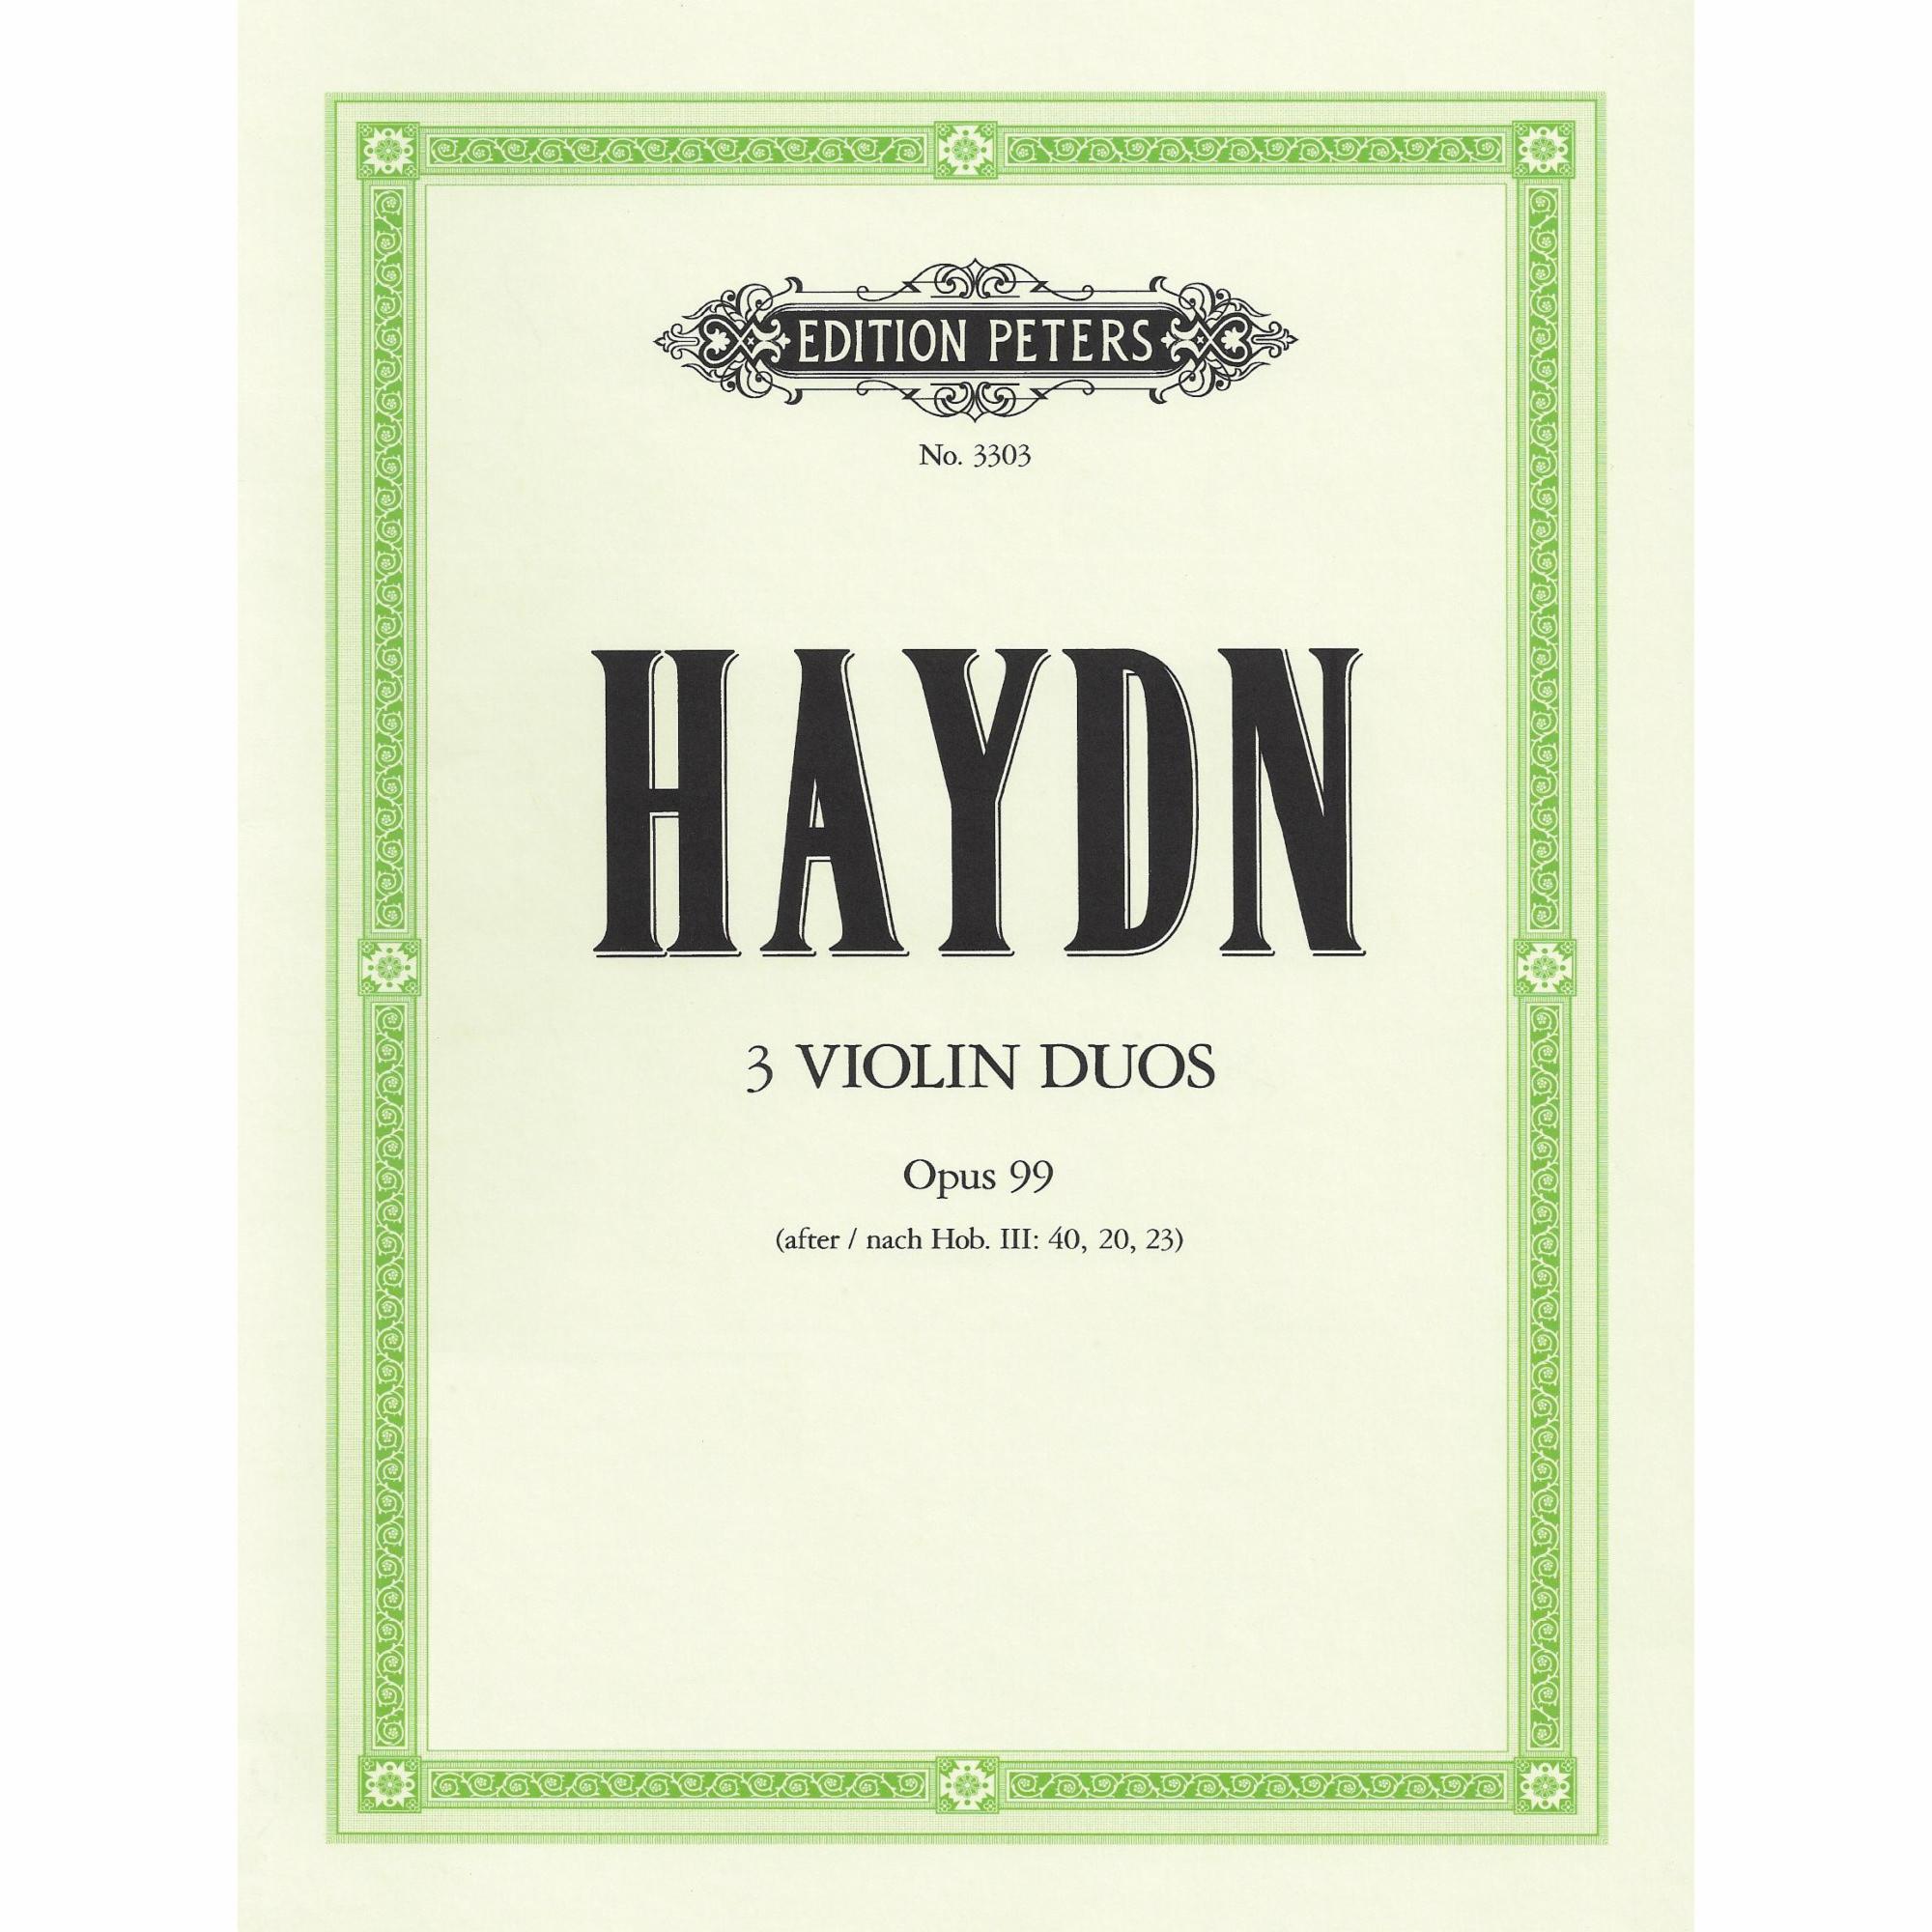 Haydn -- 3 Violin Duos for Two Violins